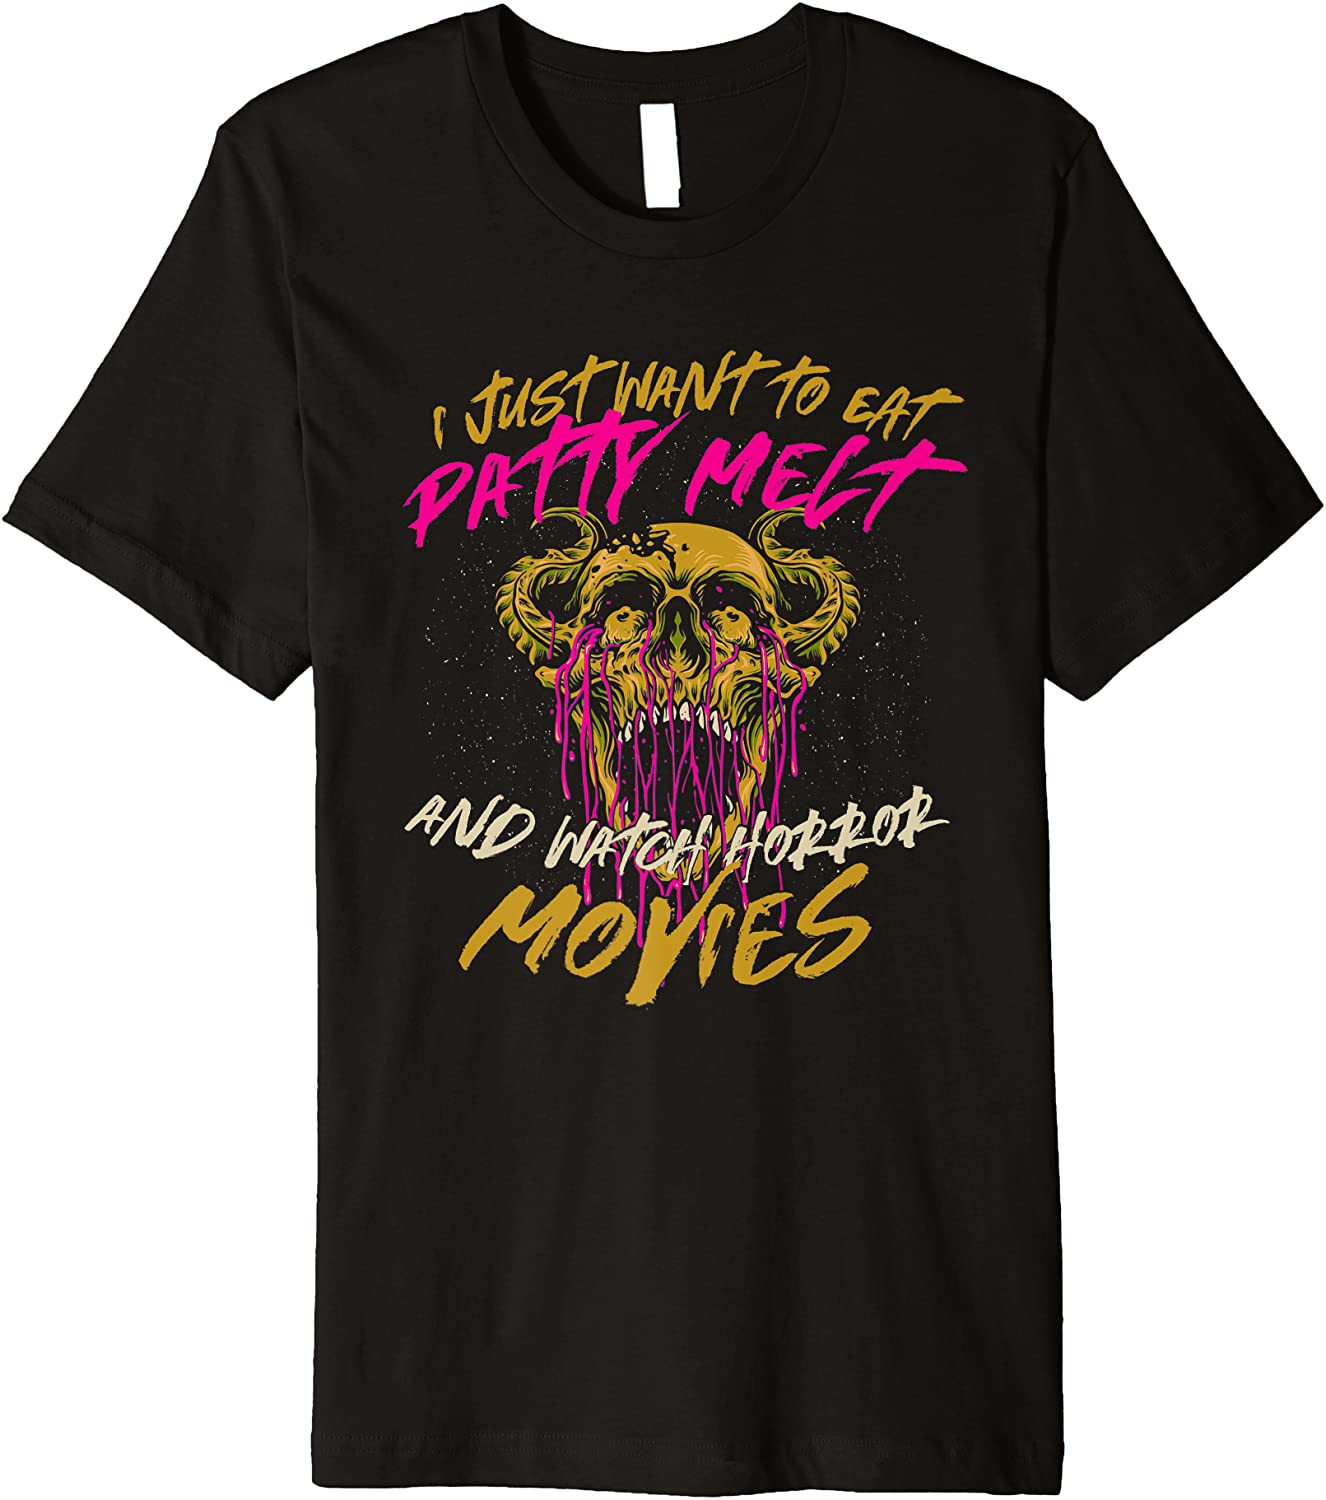 Eat Patty Melt And Watch Horror Movies Comfort Food Sandwich T-Shirt